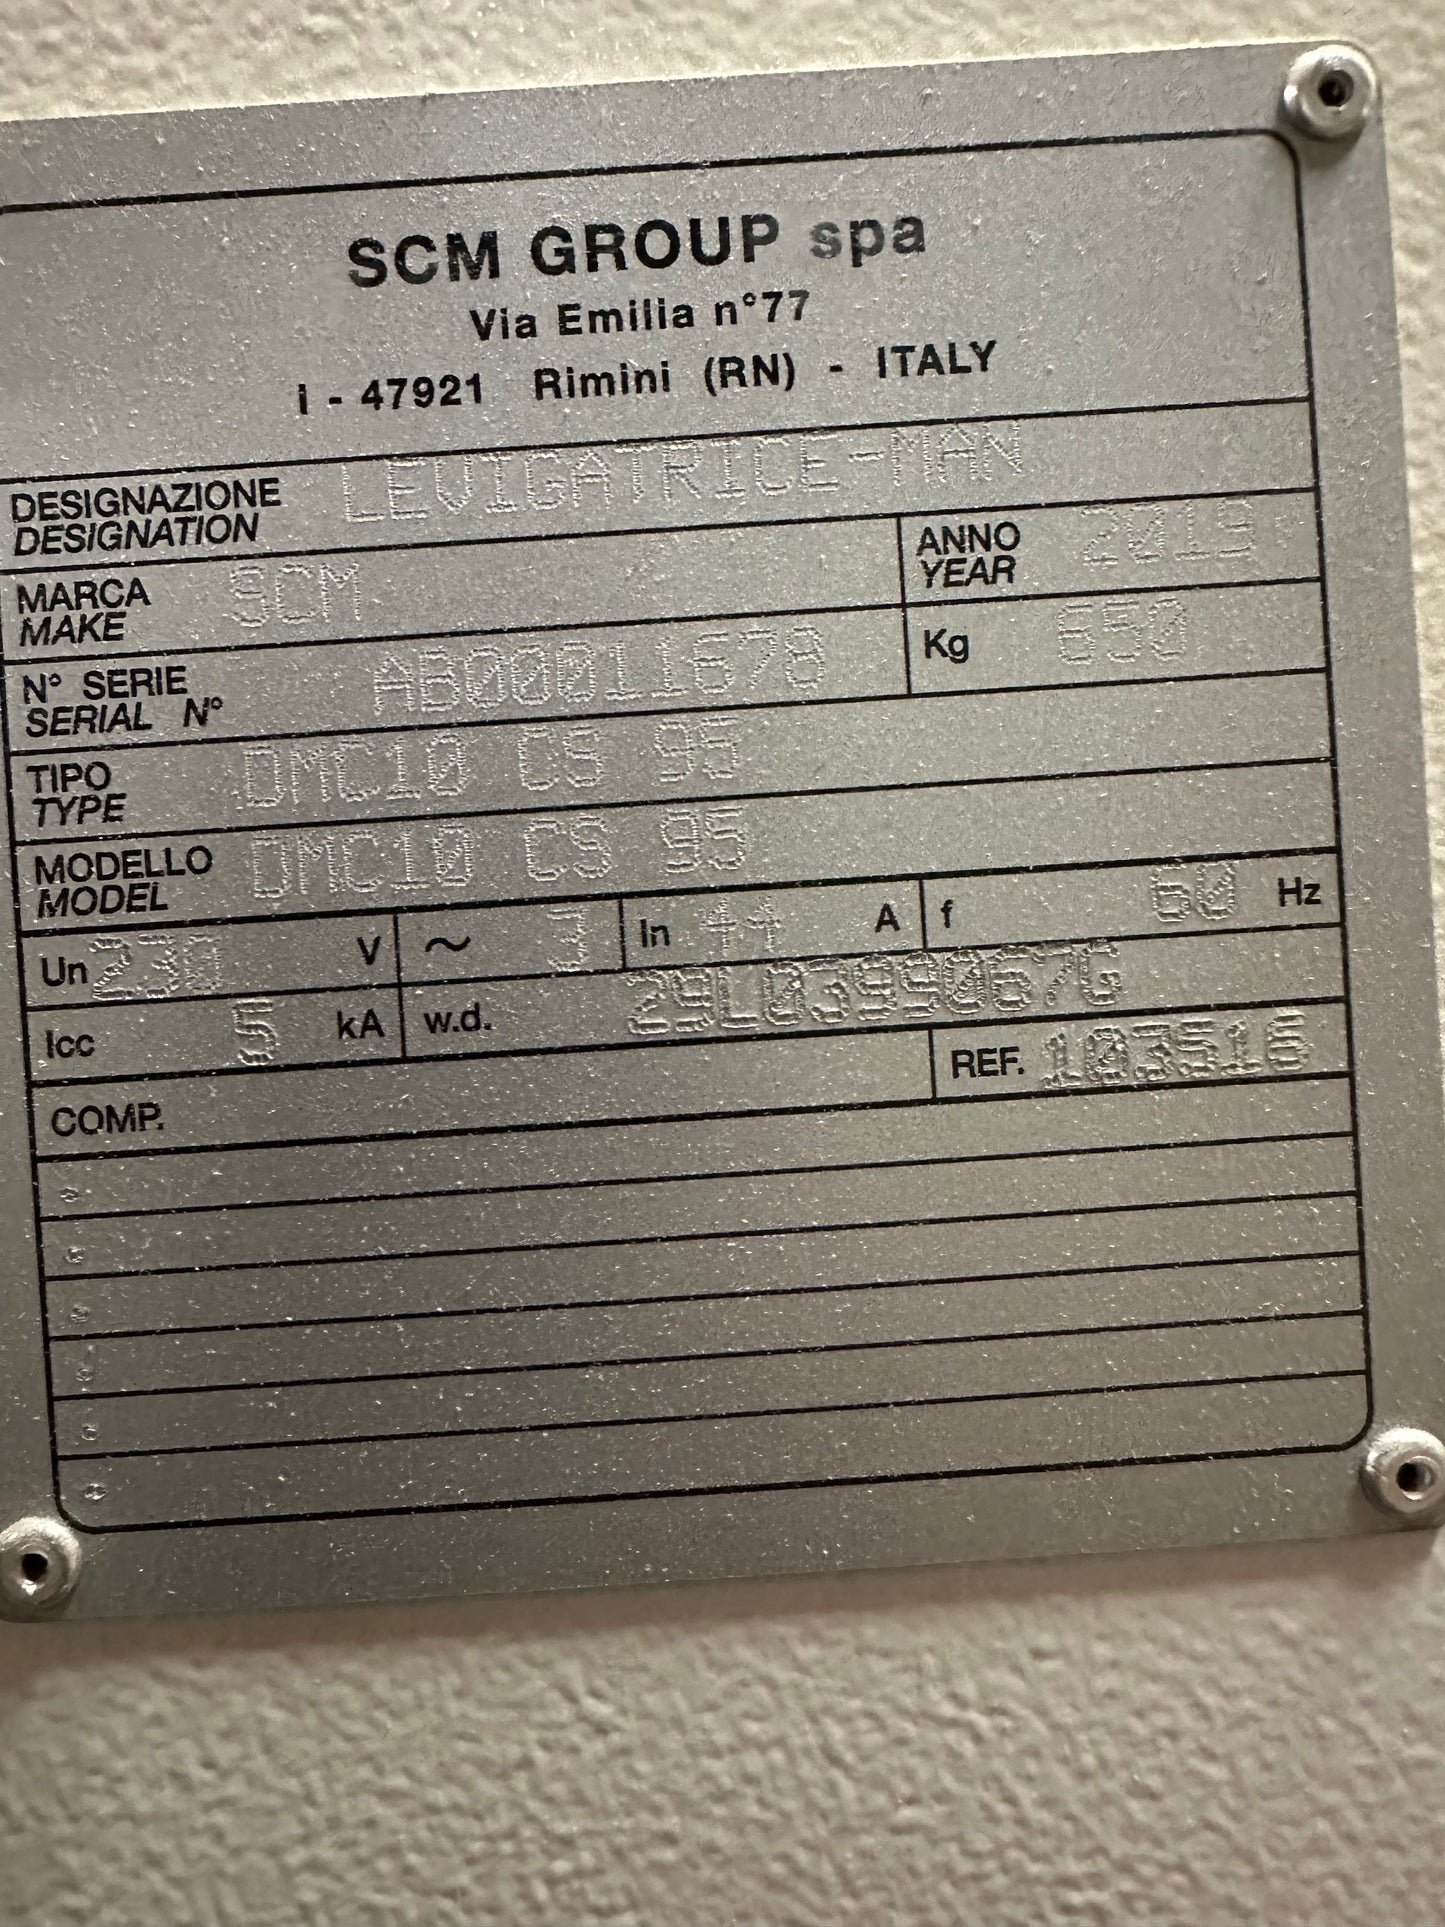 2019 SCM DMC SD10 Wide Belt Sander 37" - in Ohio